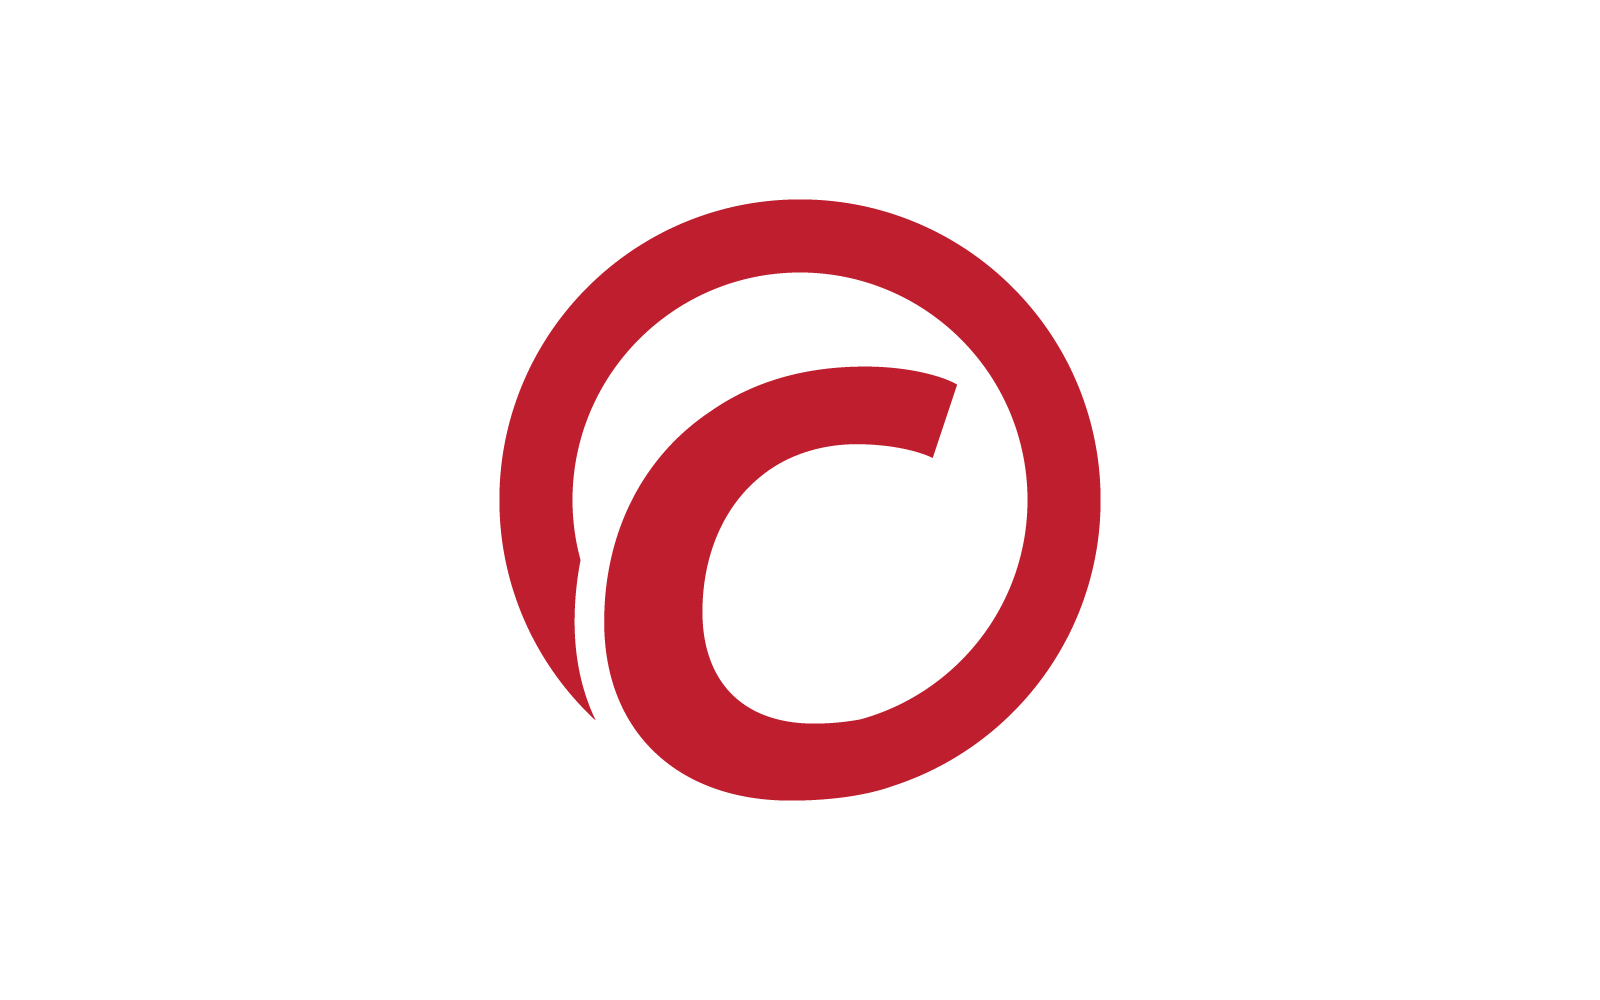 Modern C Initial letter alphabet font logo vector design Logo Template